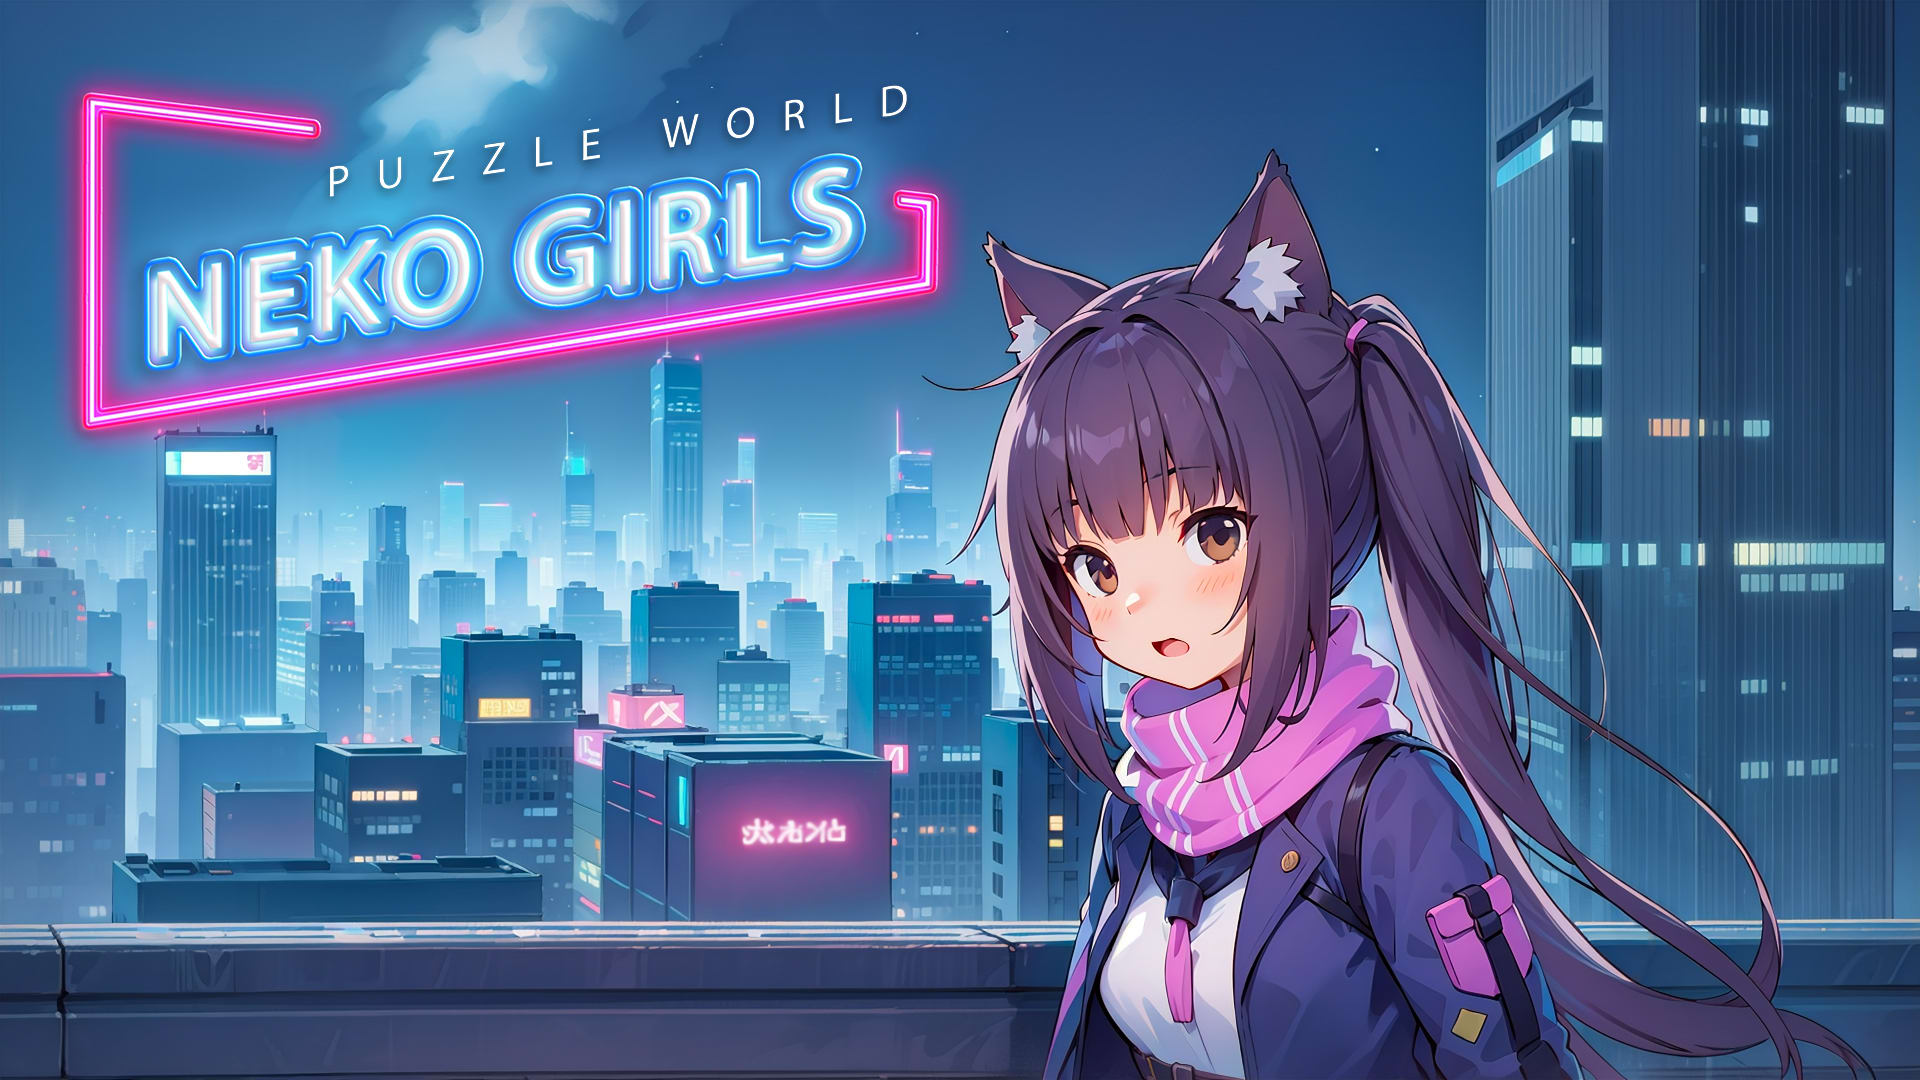 Puzzle World: Neko Girls 1